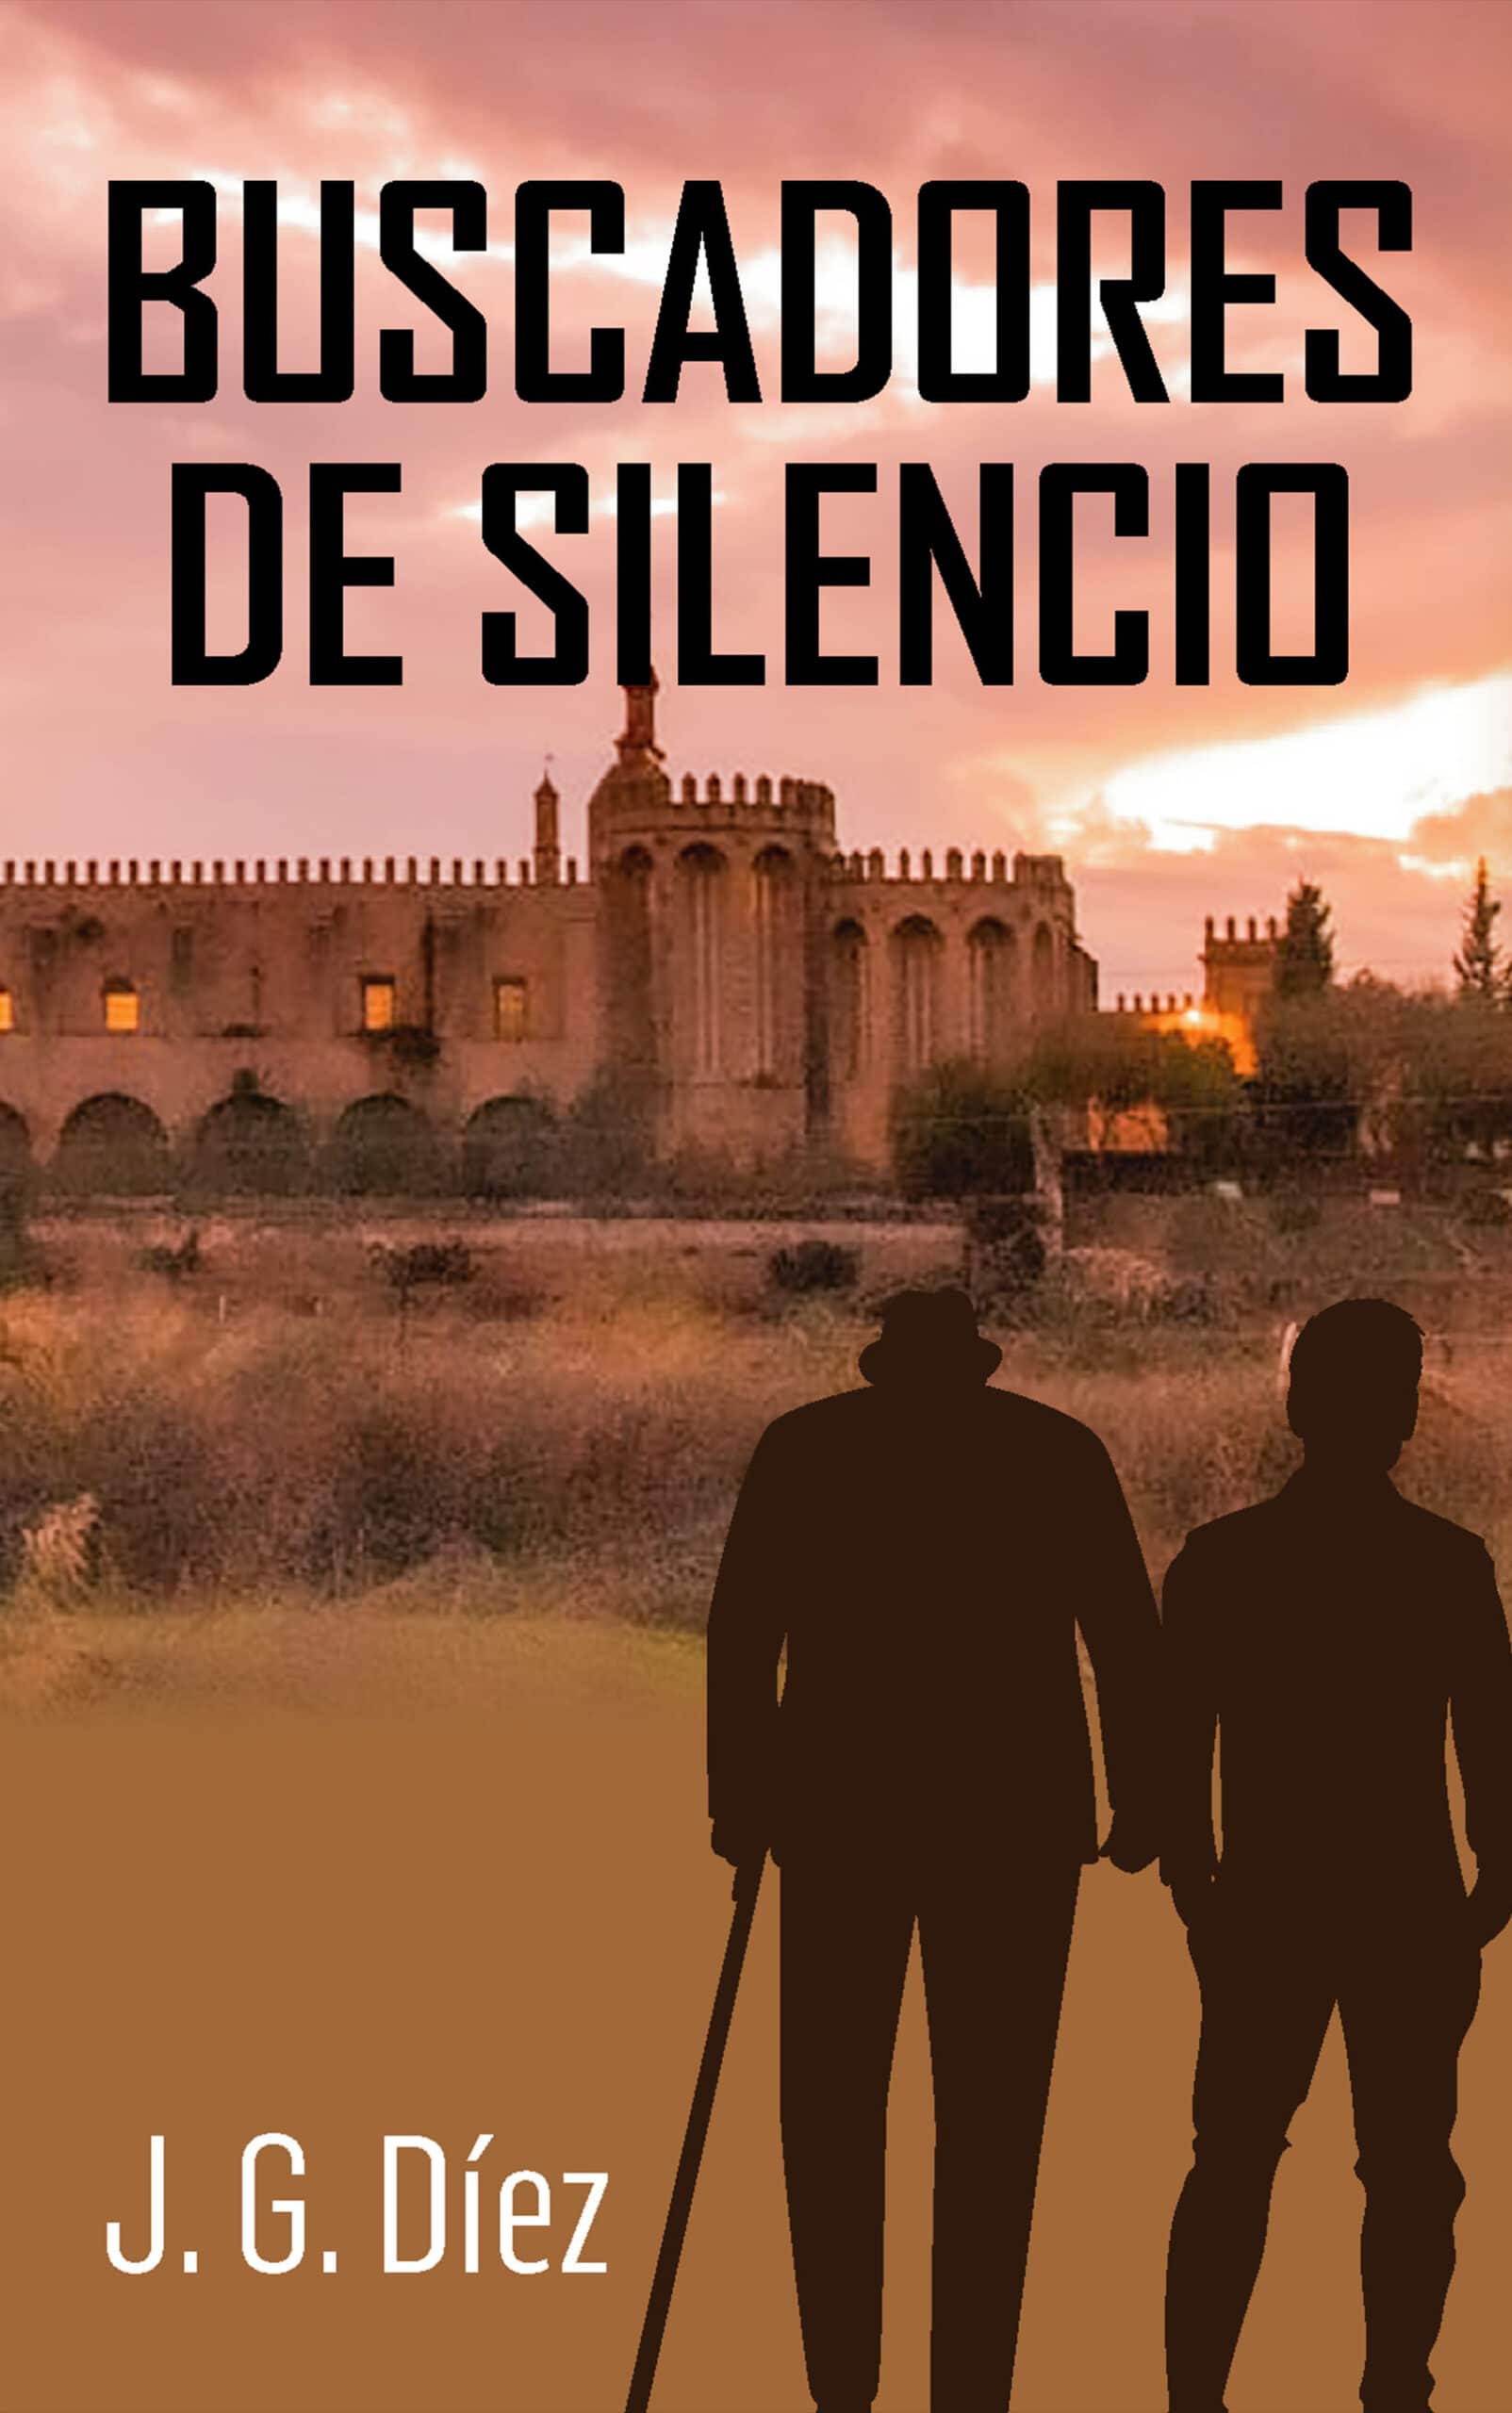 Buscadores de silencio, de José G. Díez